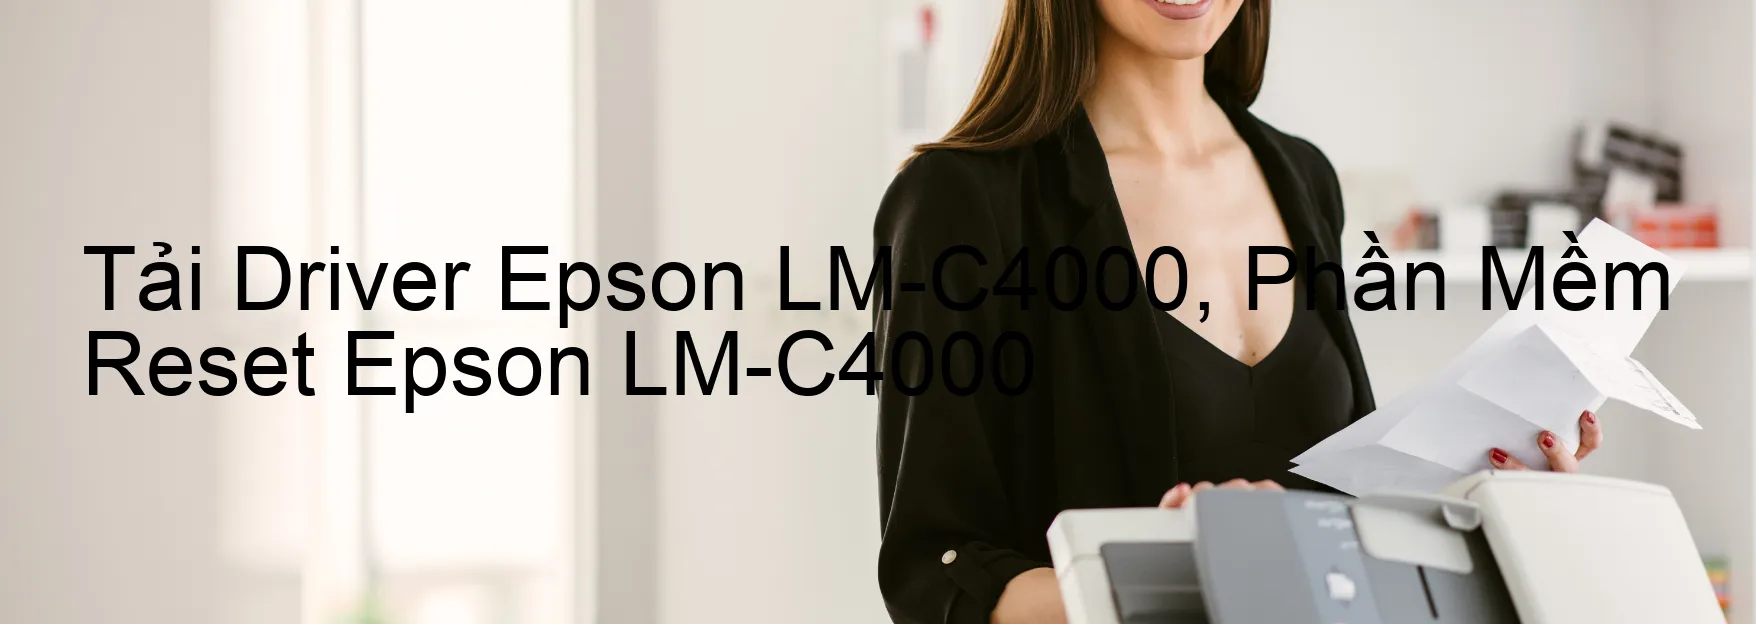 Driver Epson LM-C4000, Phần Mềm Reset Epson LM-C4000